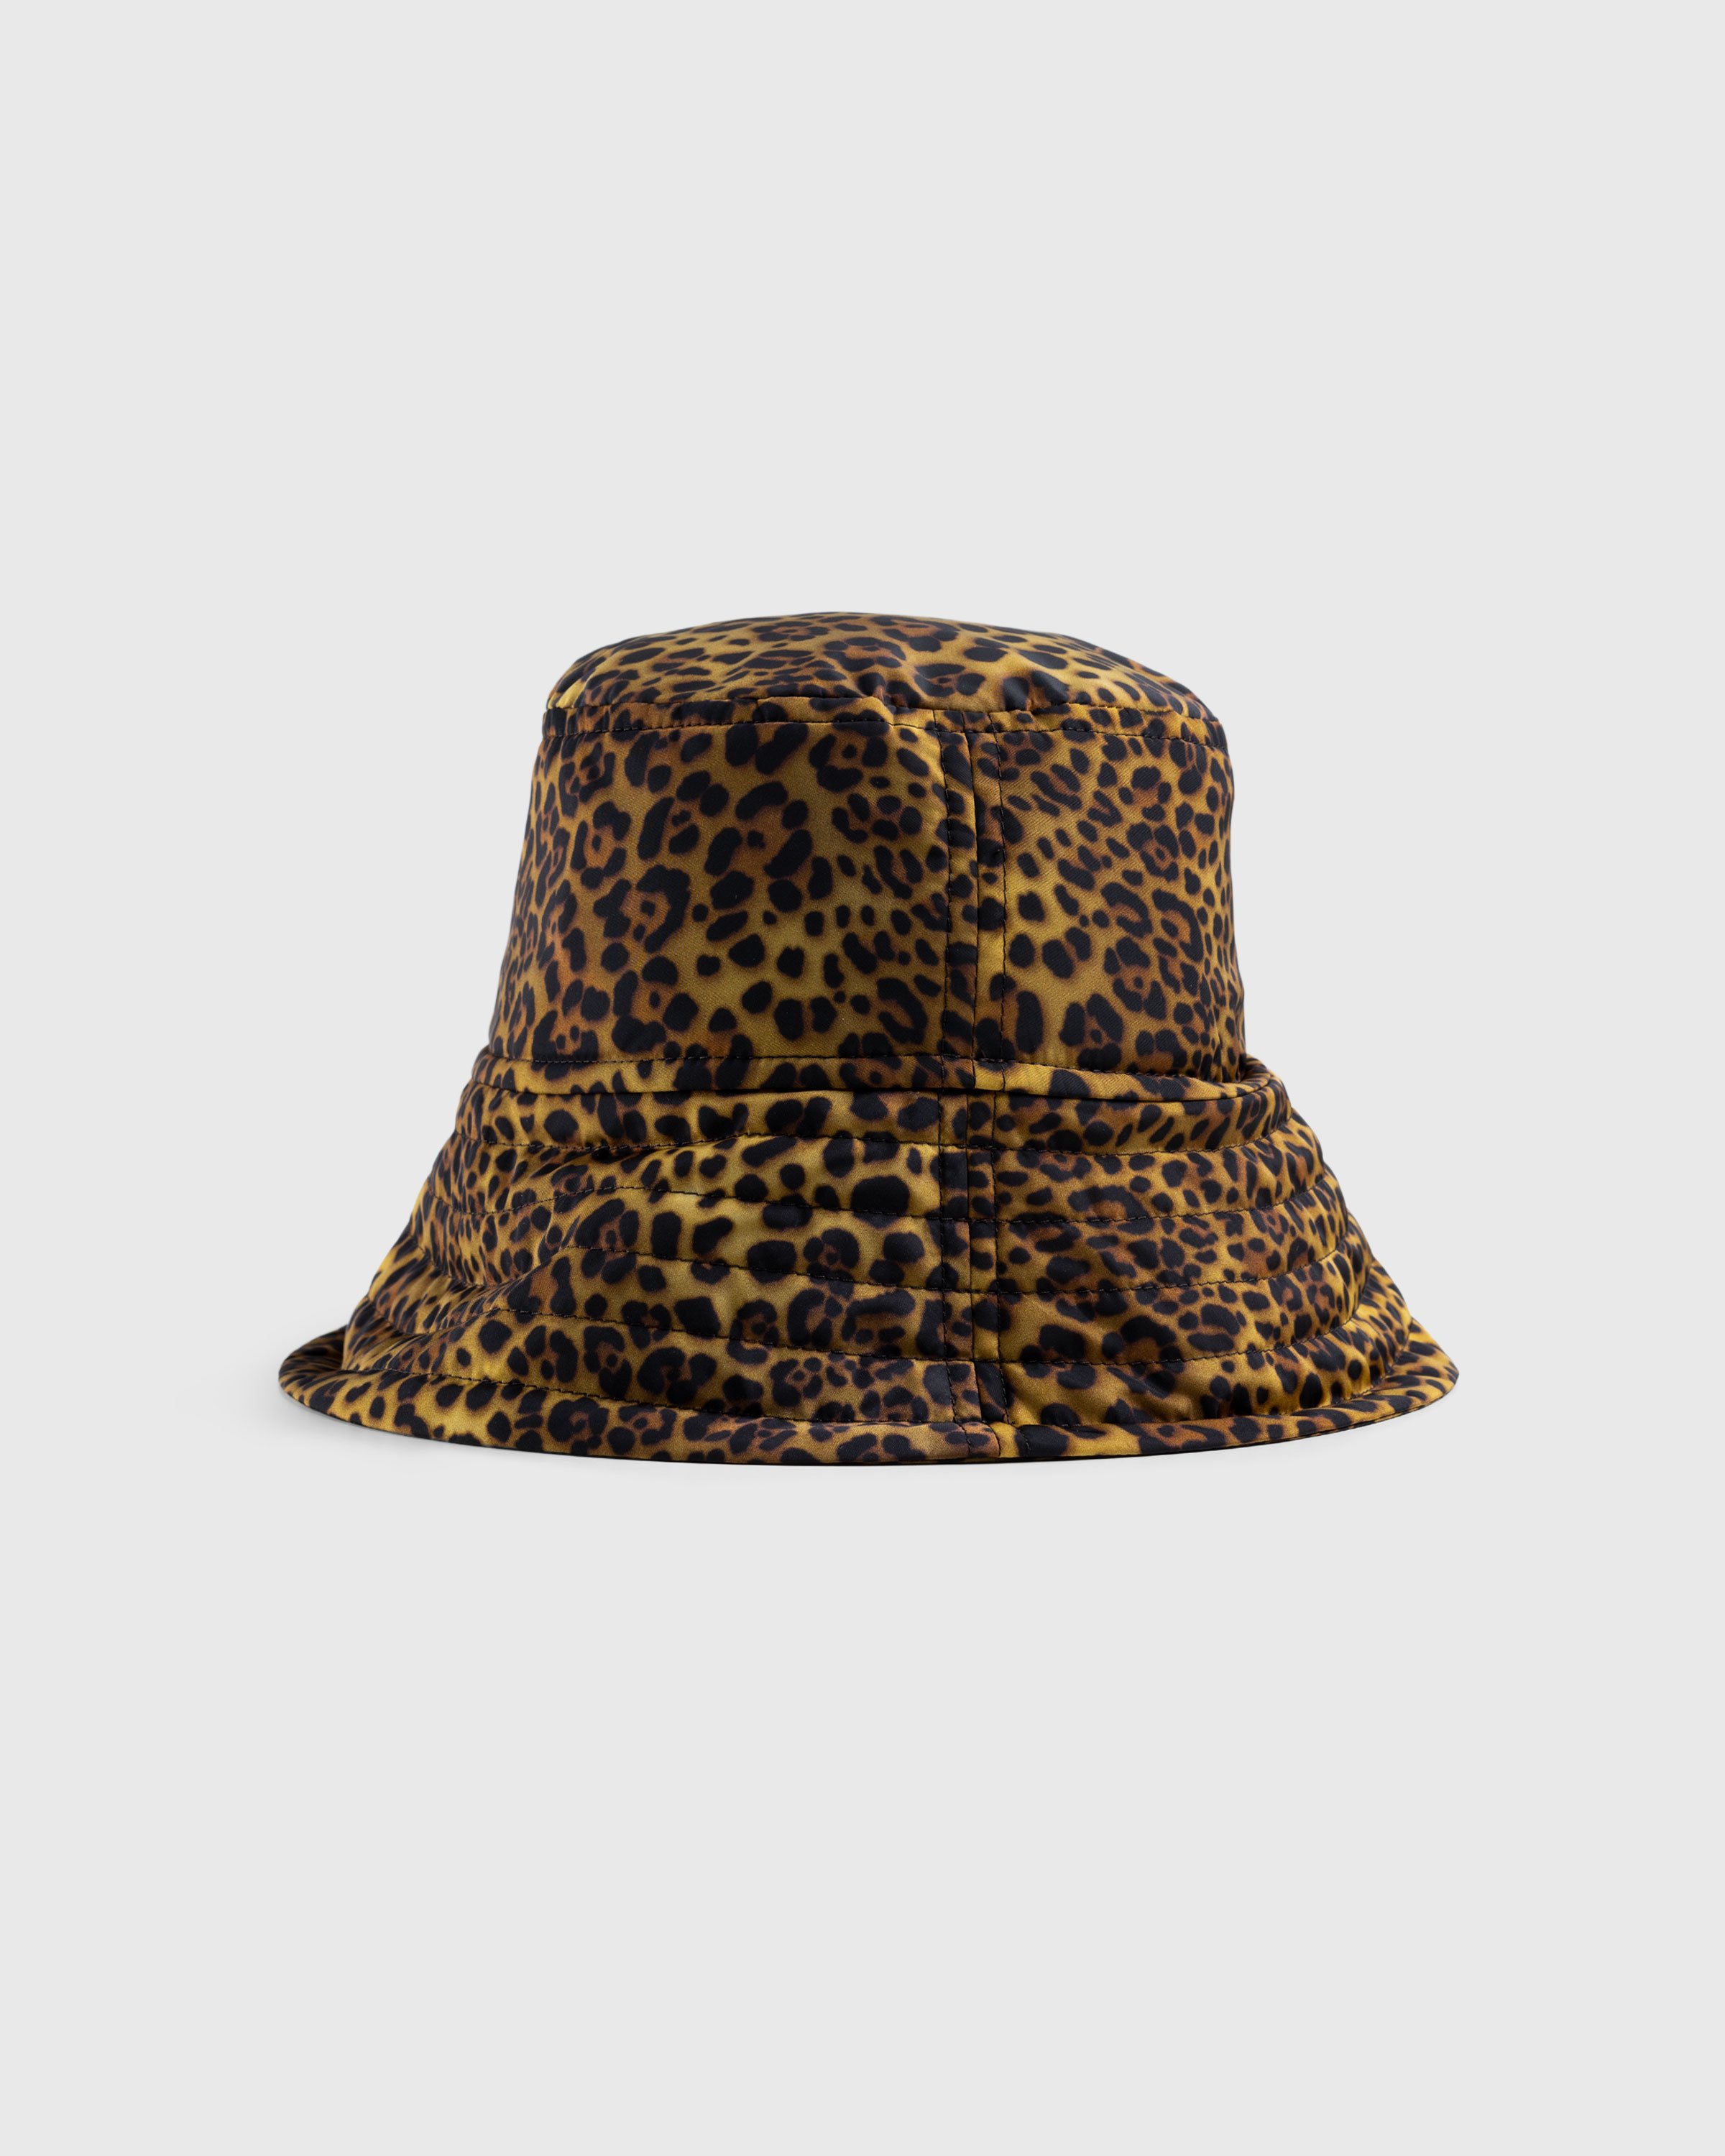 Dries van Noten - Gilly Hat Dessin A - Accessories - Brown - Image 1